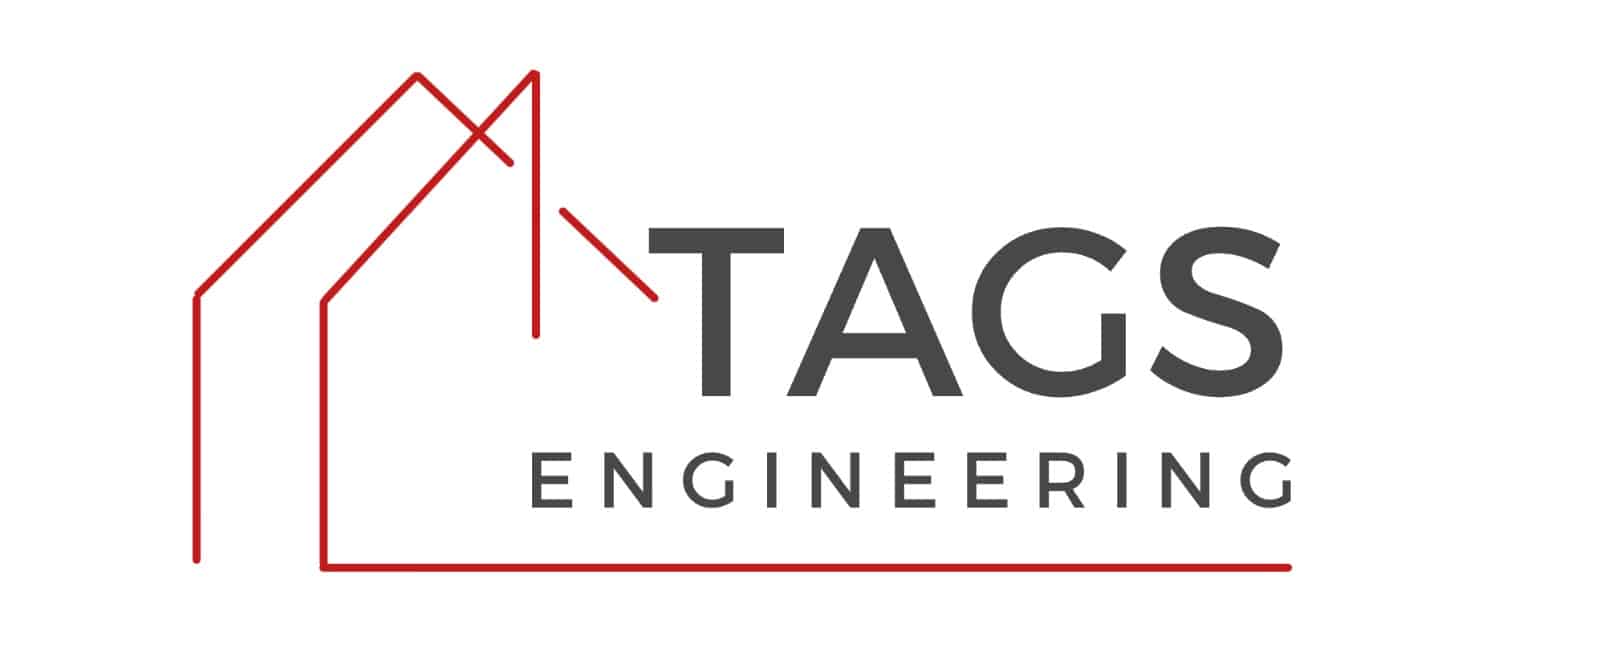 Tags Engineering logo